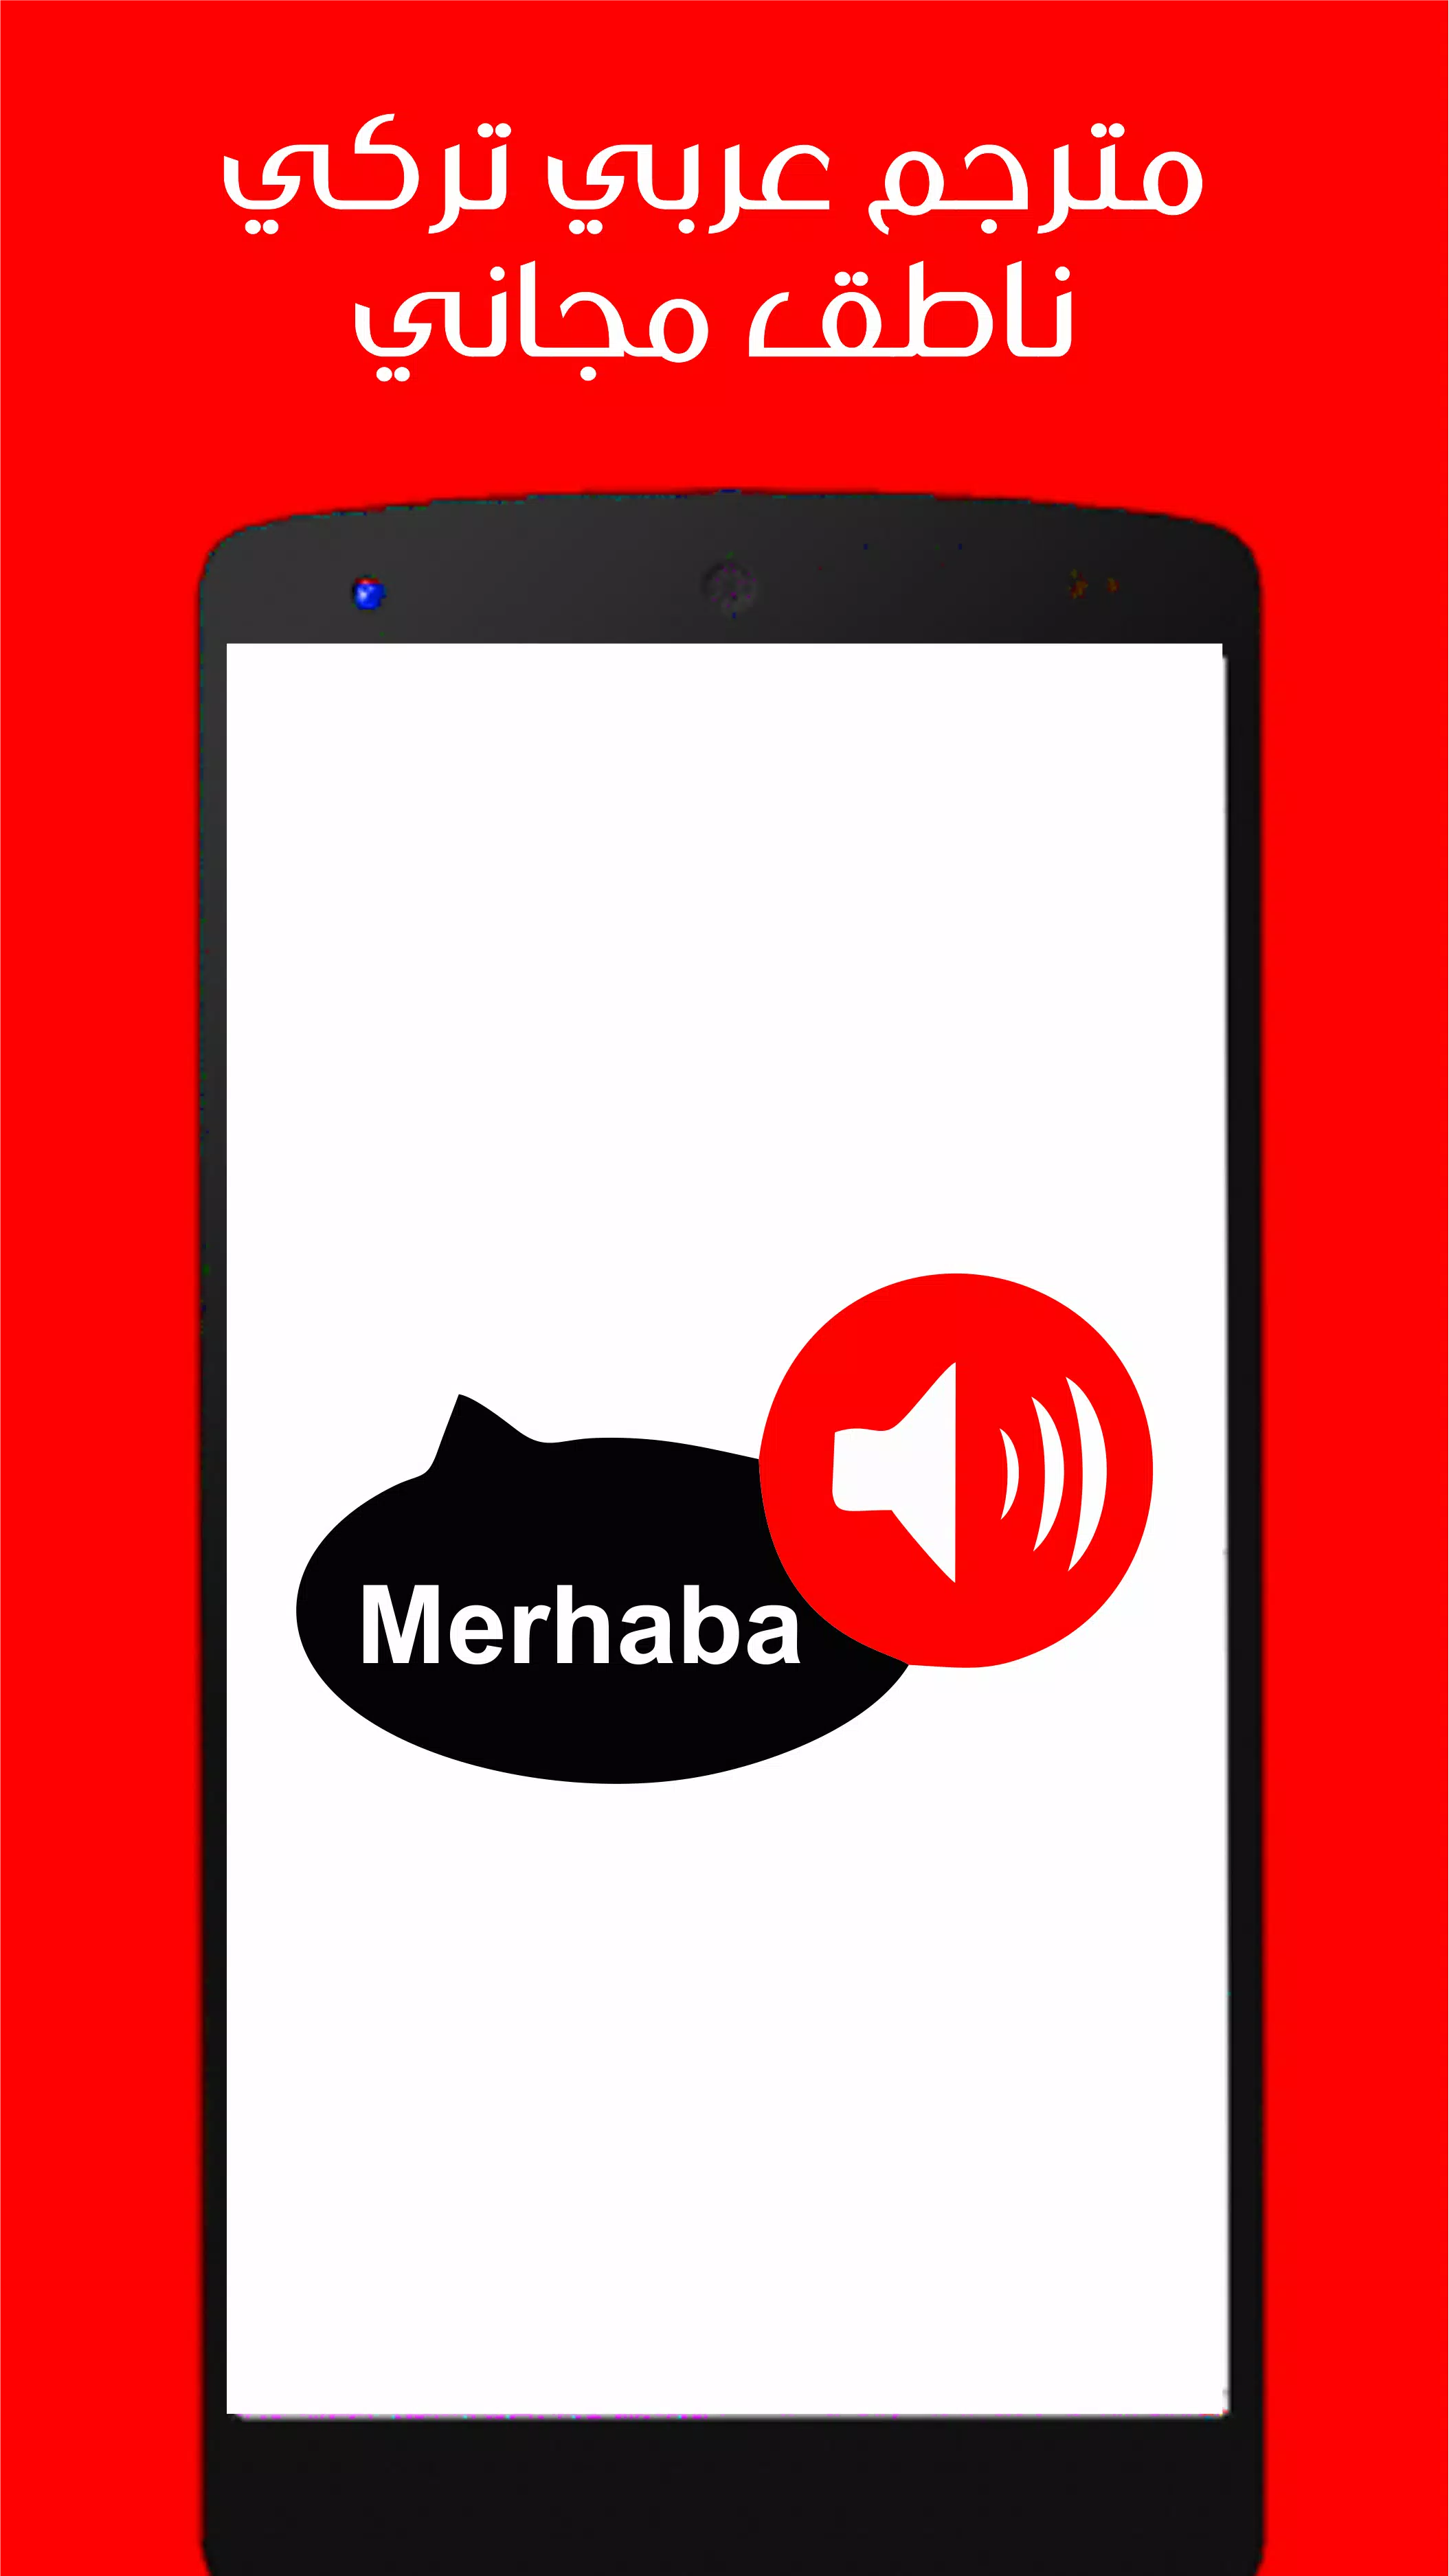 مترجم عربي تركي ناطق وبالعكس APK for Android Download